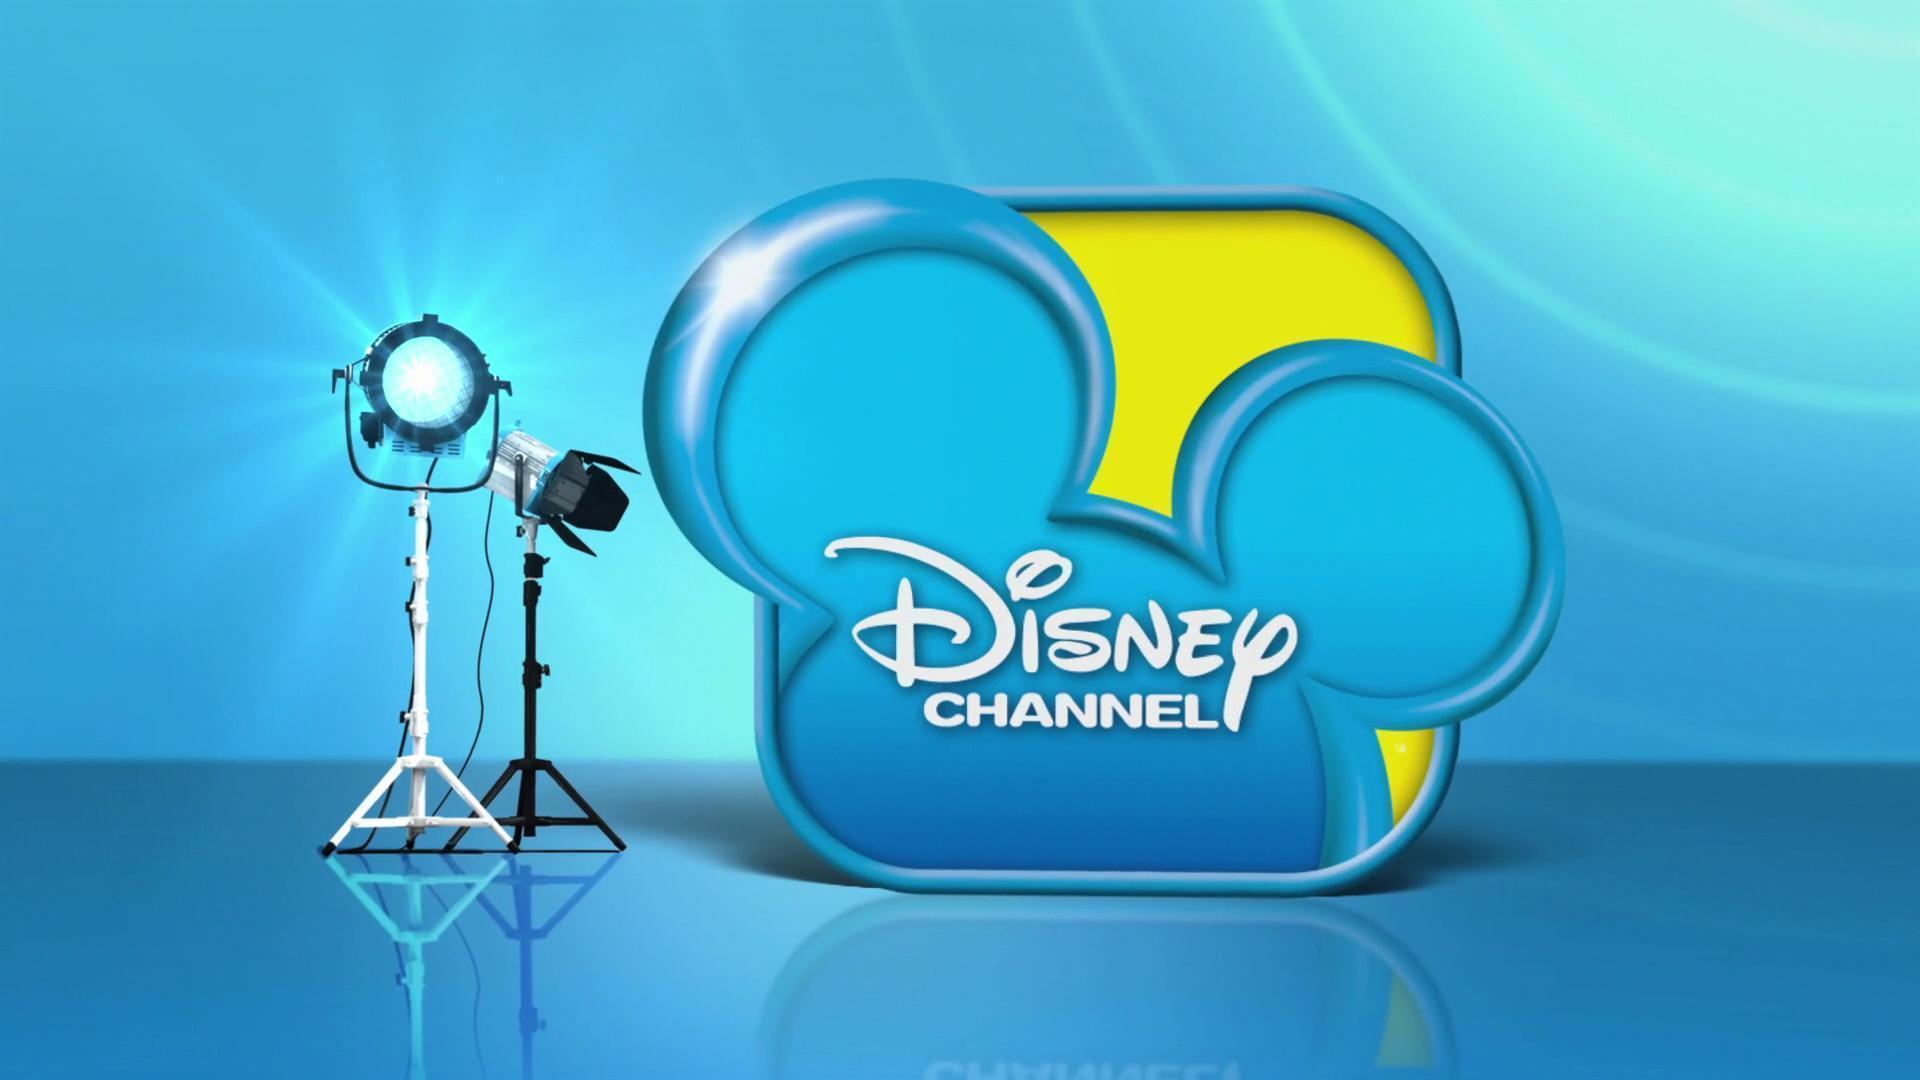 Disney Channel Original 2012.png, the logo